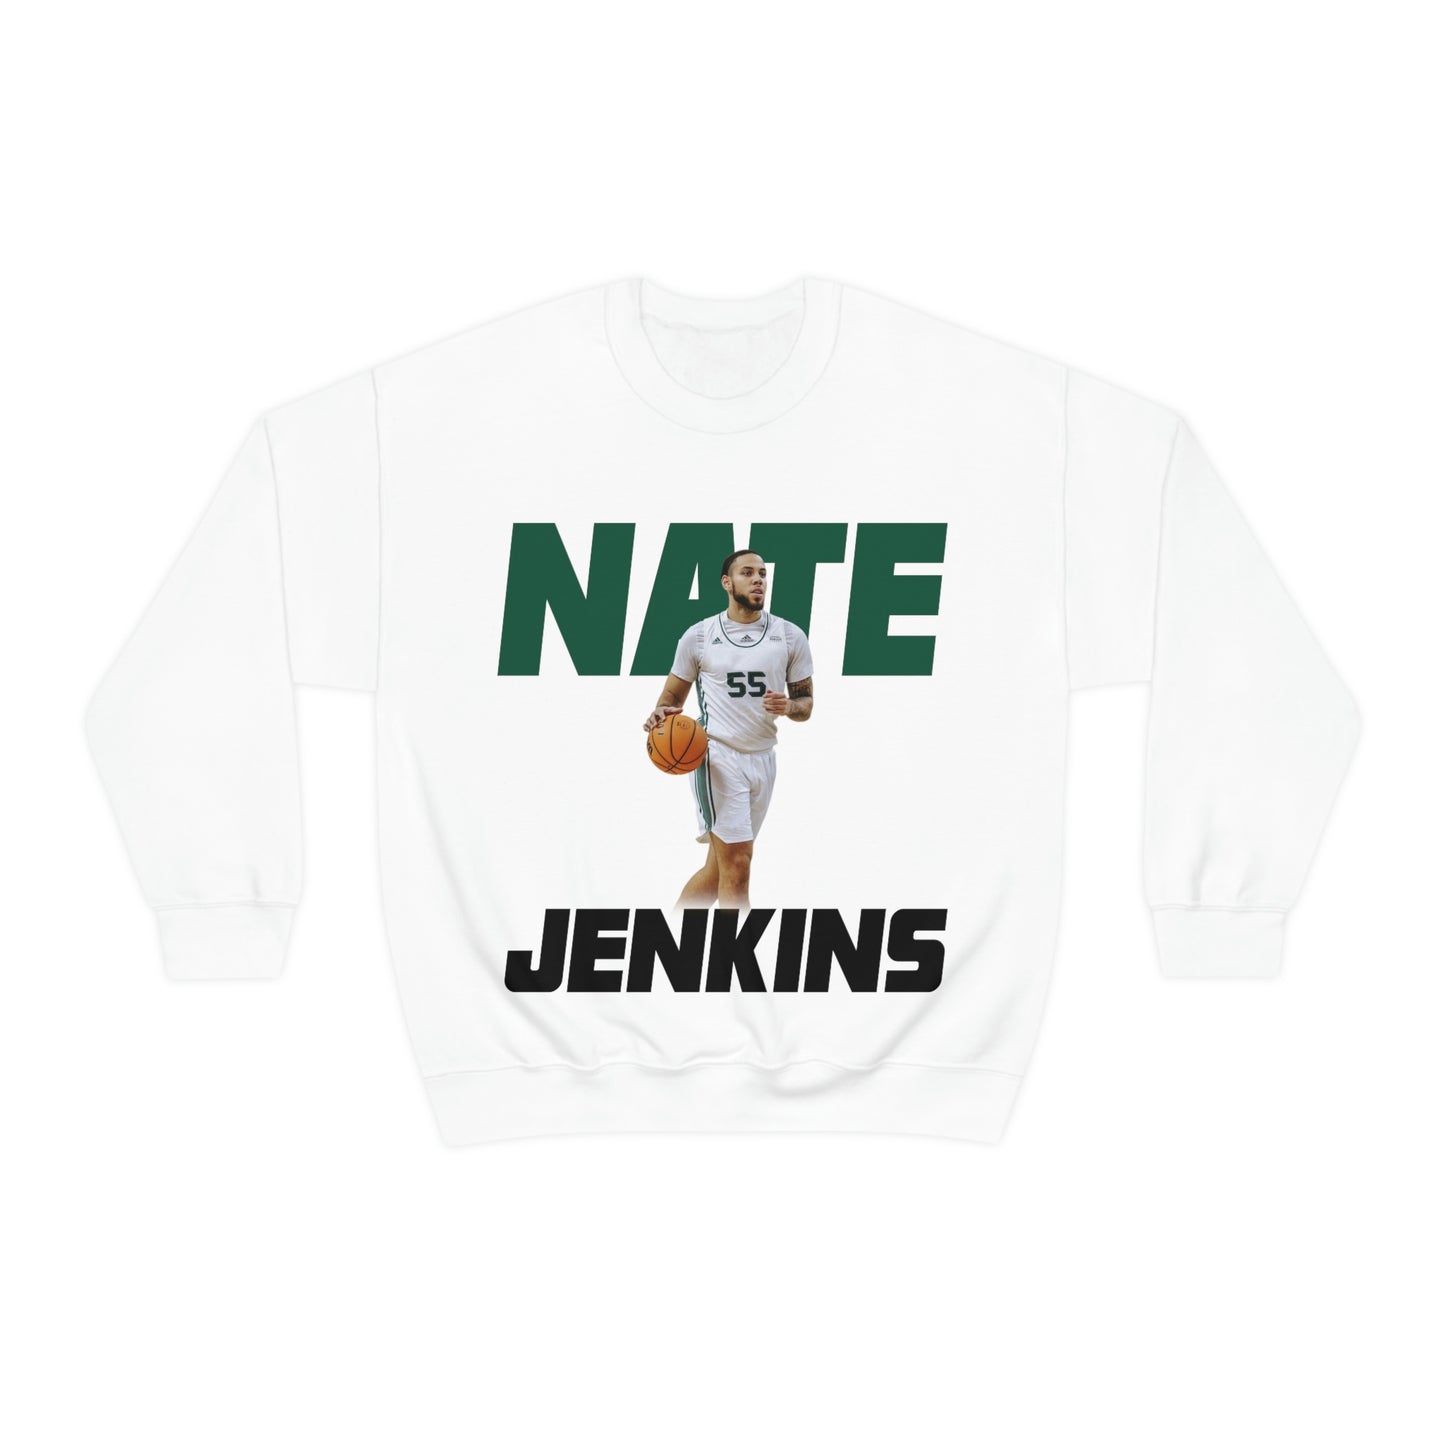 Nate Jenkins: Essential Crewneck